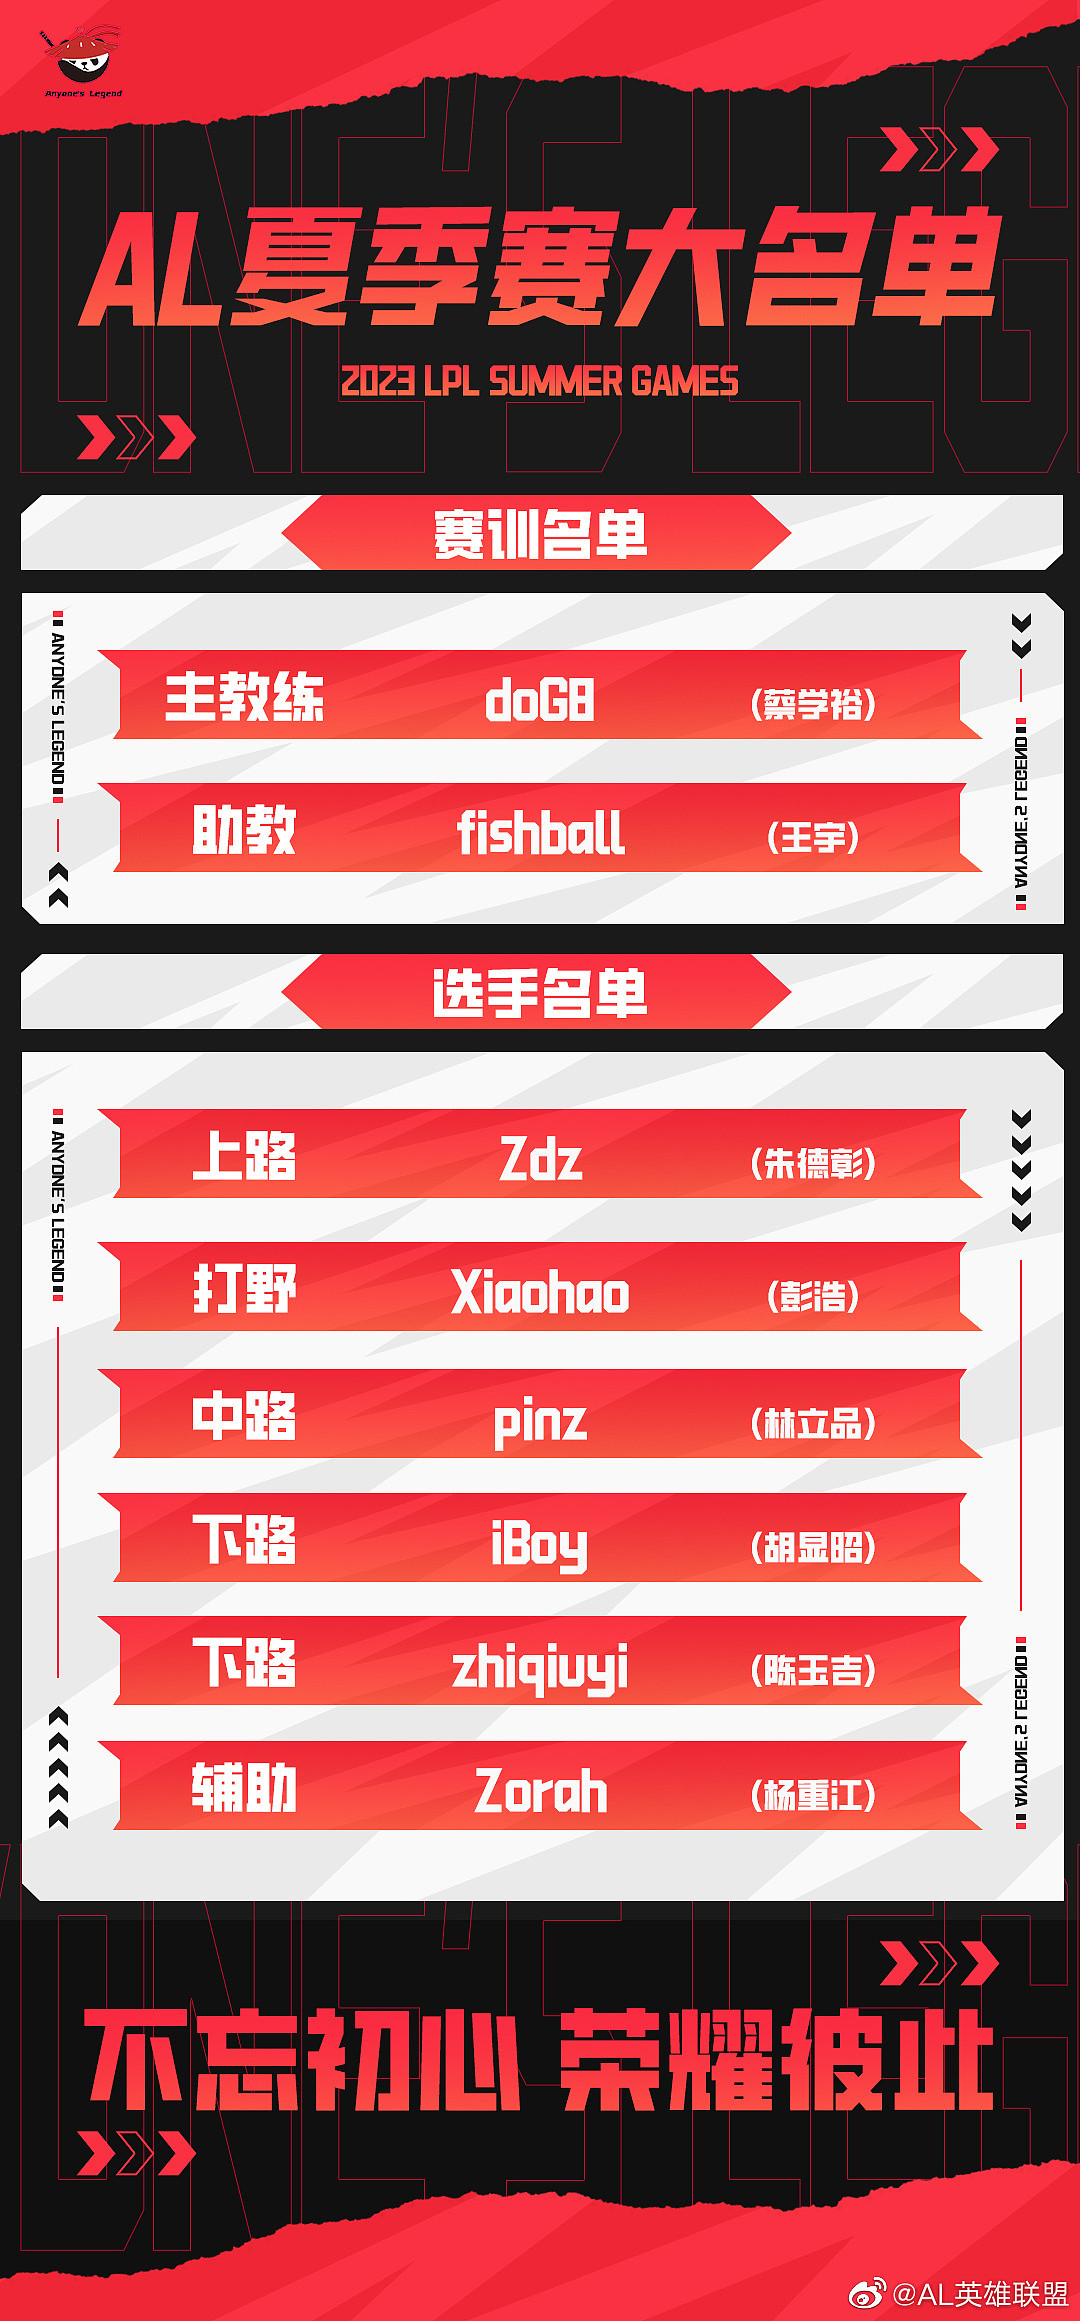 AL官宣大名单：上中野留队 iboy、zhiqiuyi、Zorah加盟 - 1